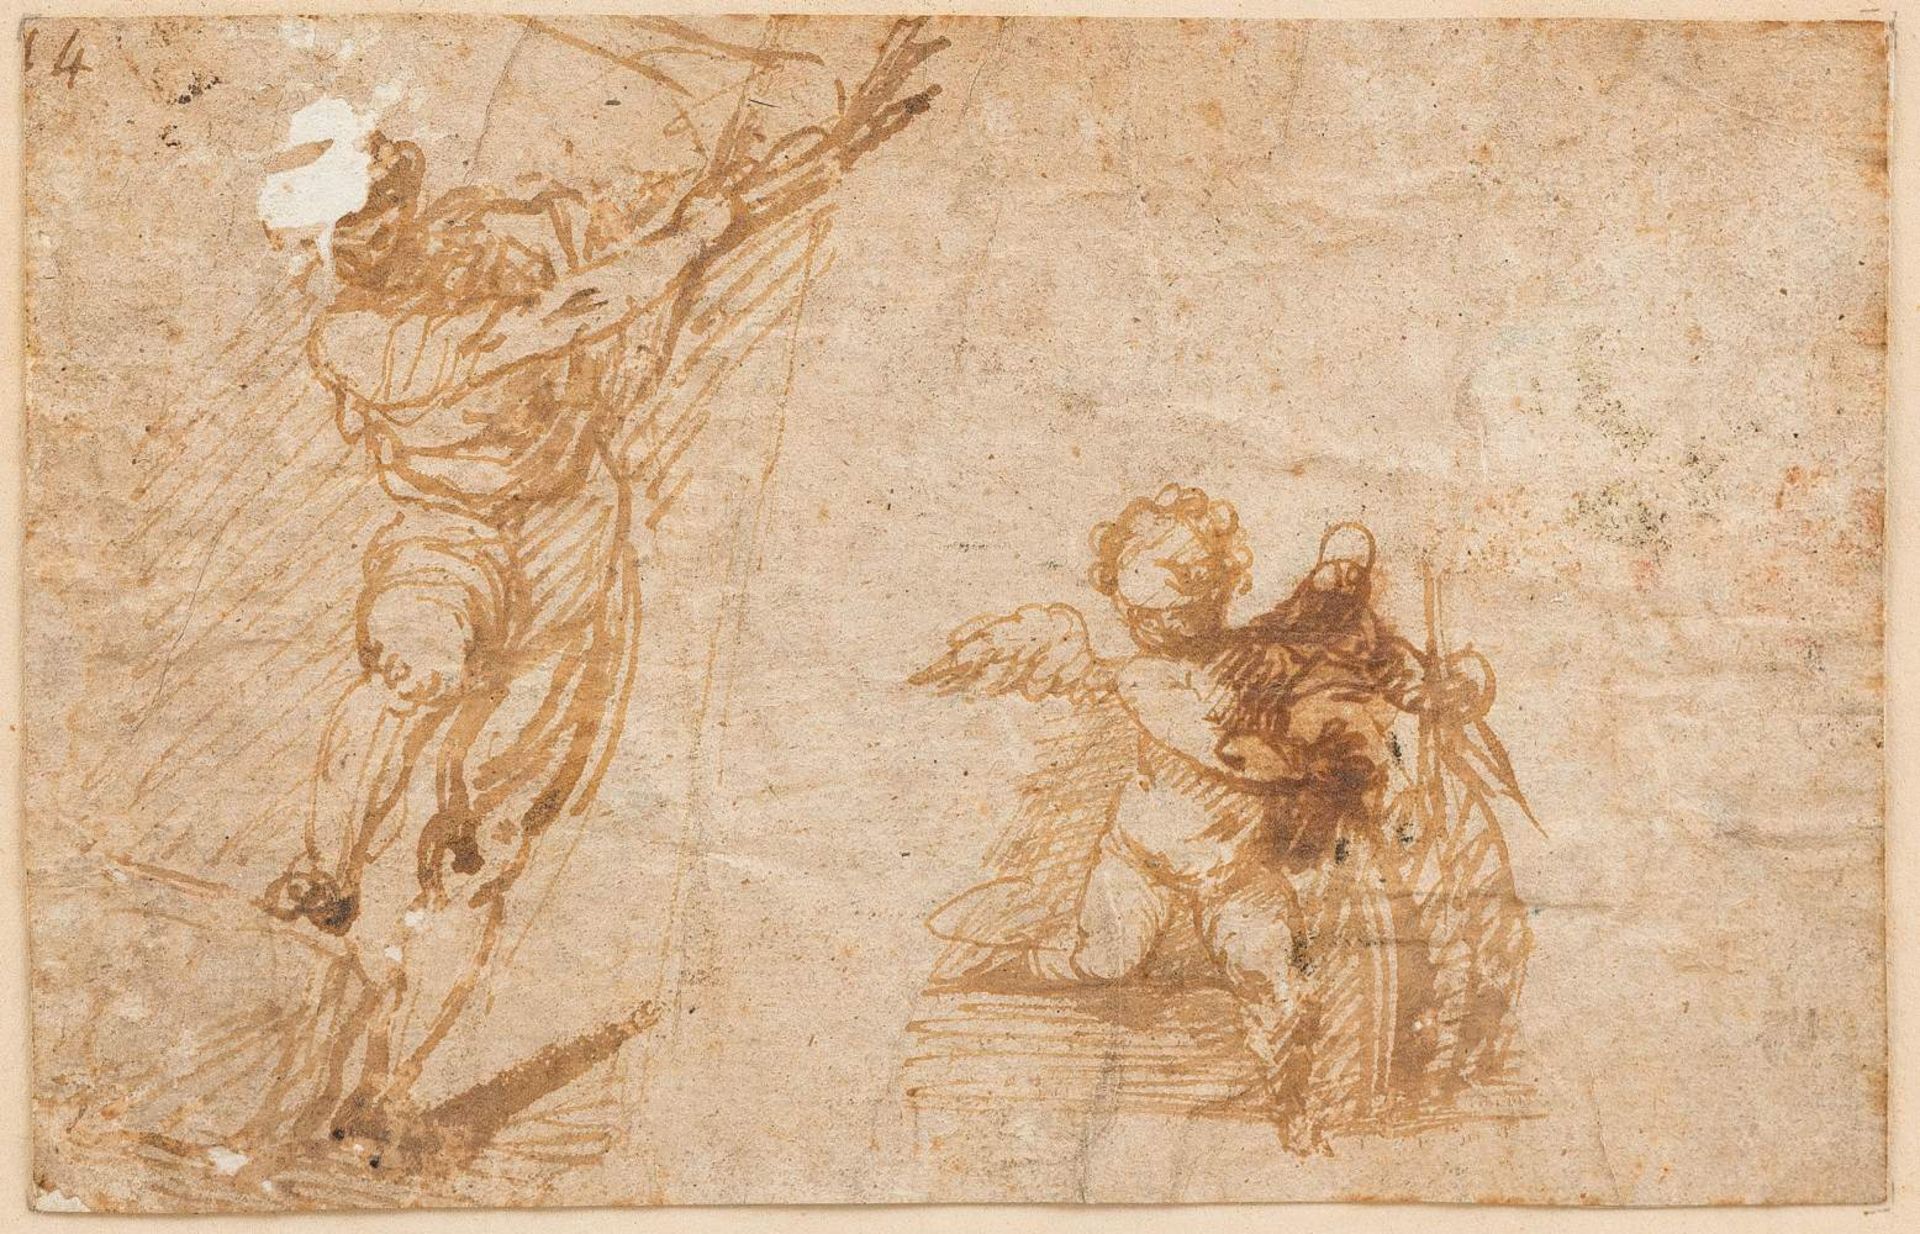 ESCUELA ITALIANA, Siglo XVII Arcángel Tinta Marrón/Papel. Enmarcado.9,5 x 14,5 cms.